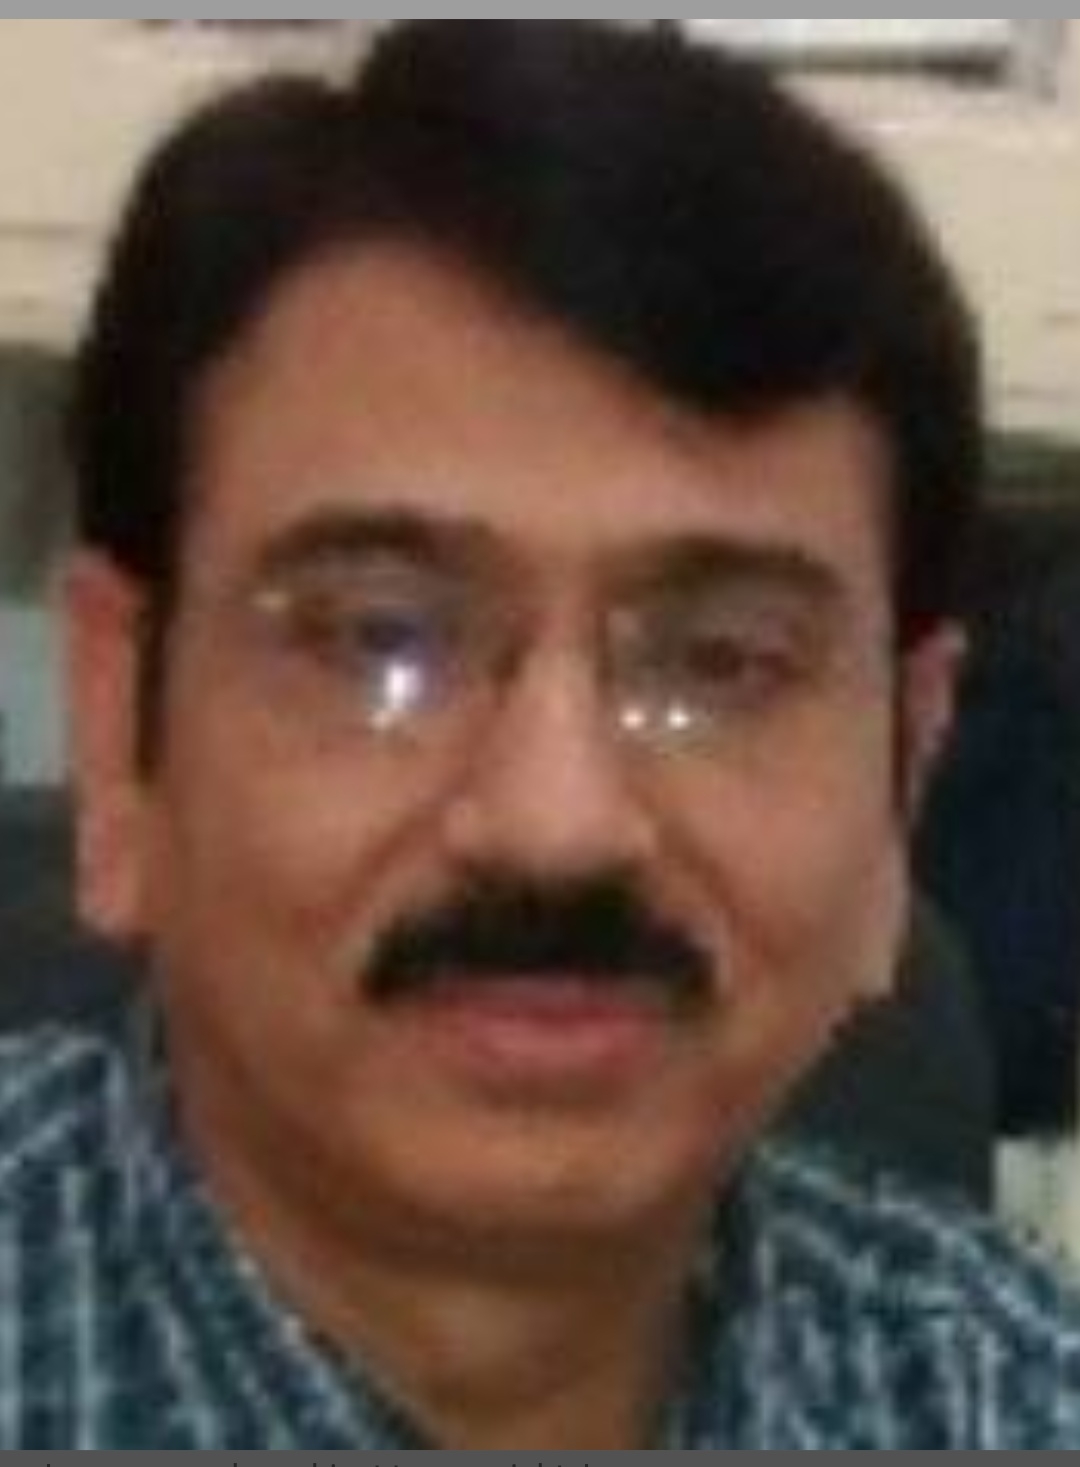 Dr. Ajay Arora